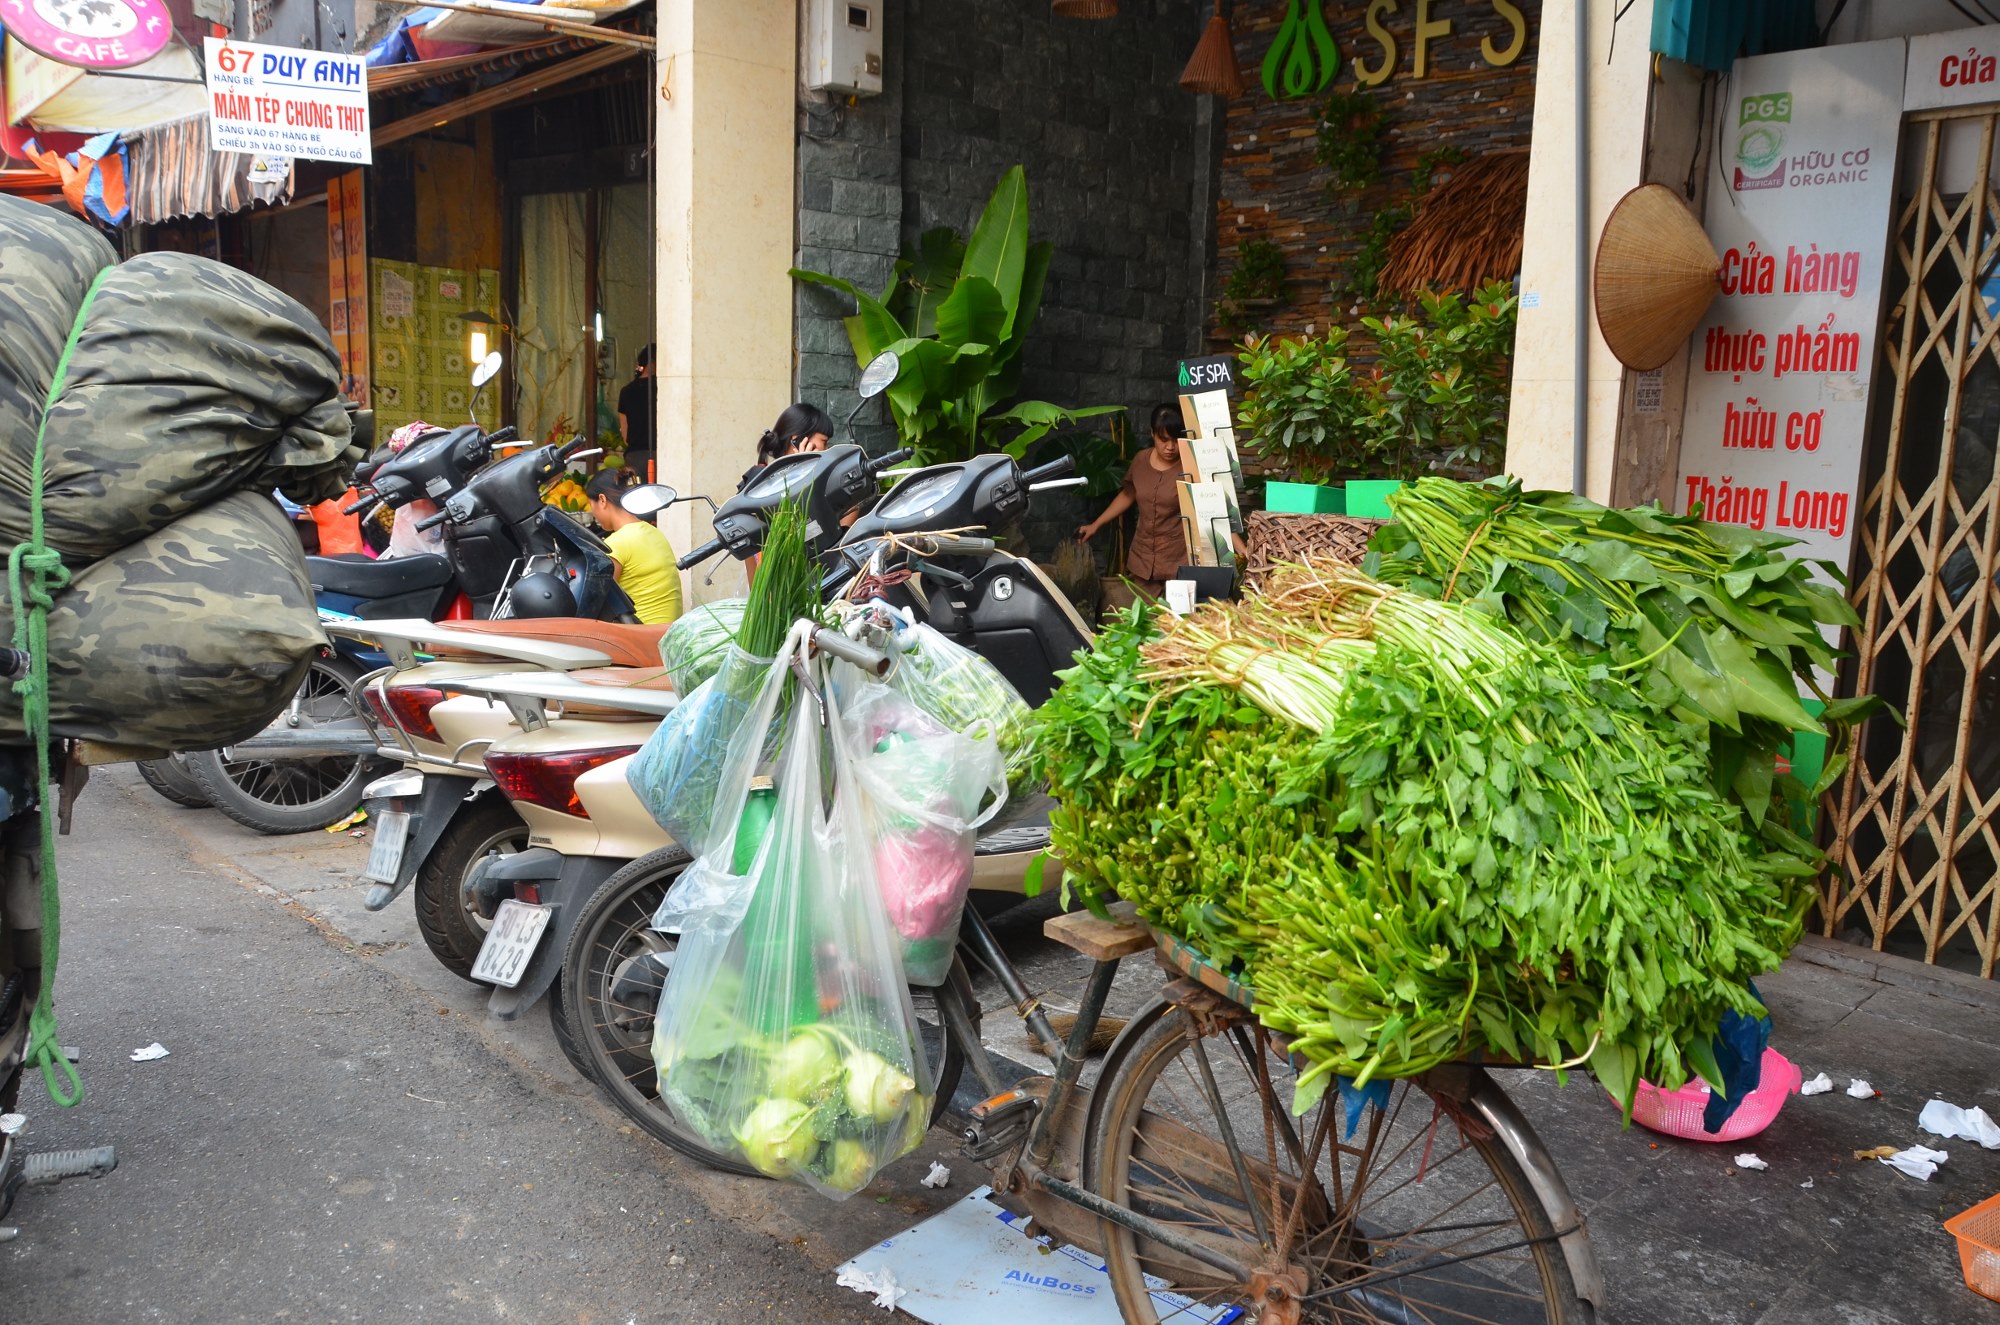 ervas aromáticas, tempero, bicicleta, vendedor de rua, comida de rua, vietnam, hanoi